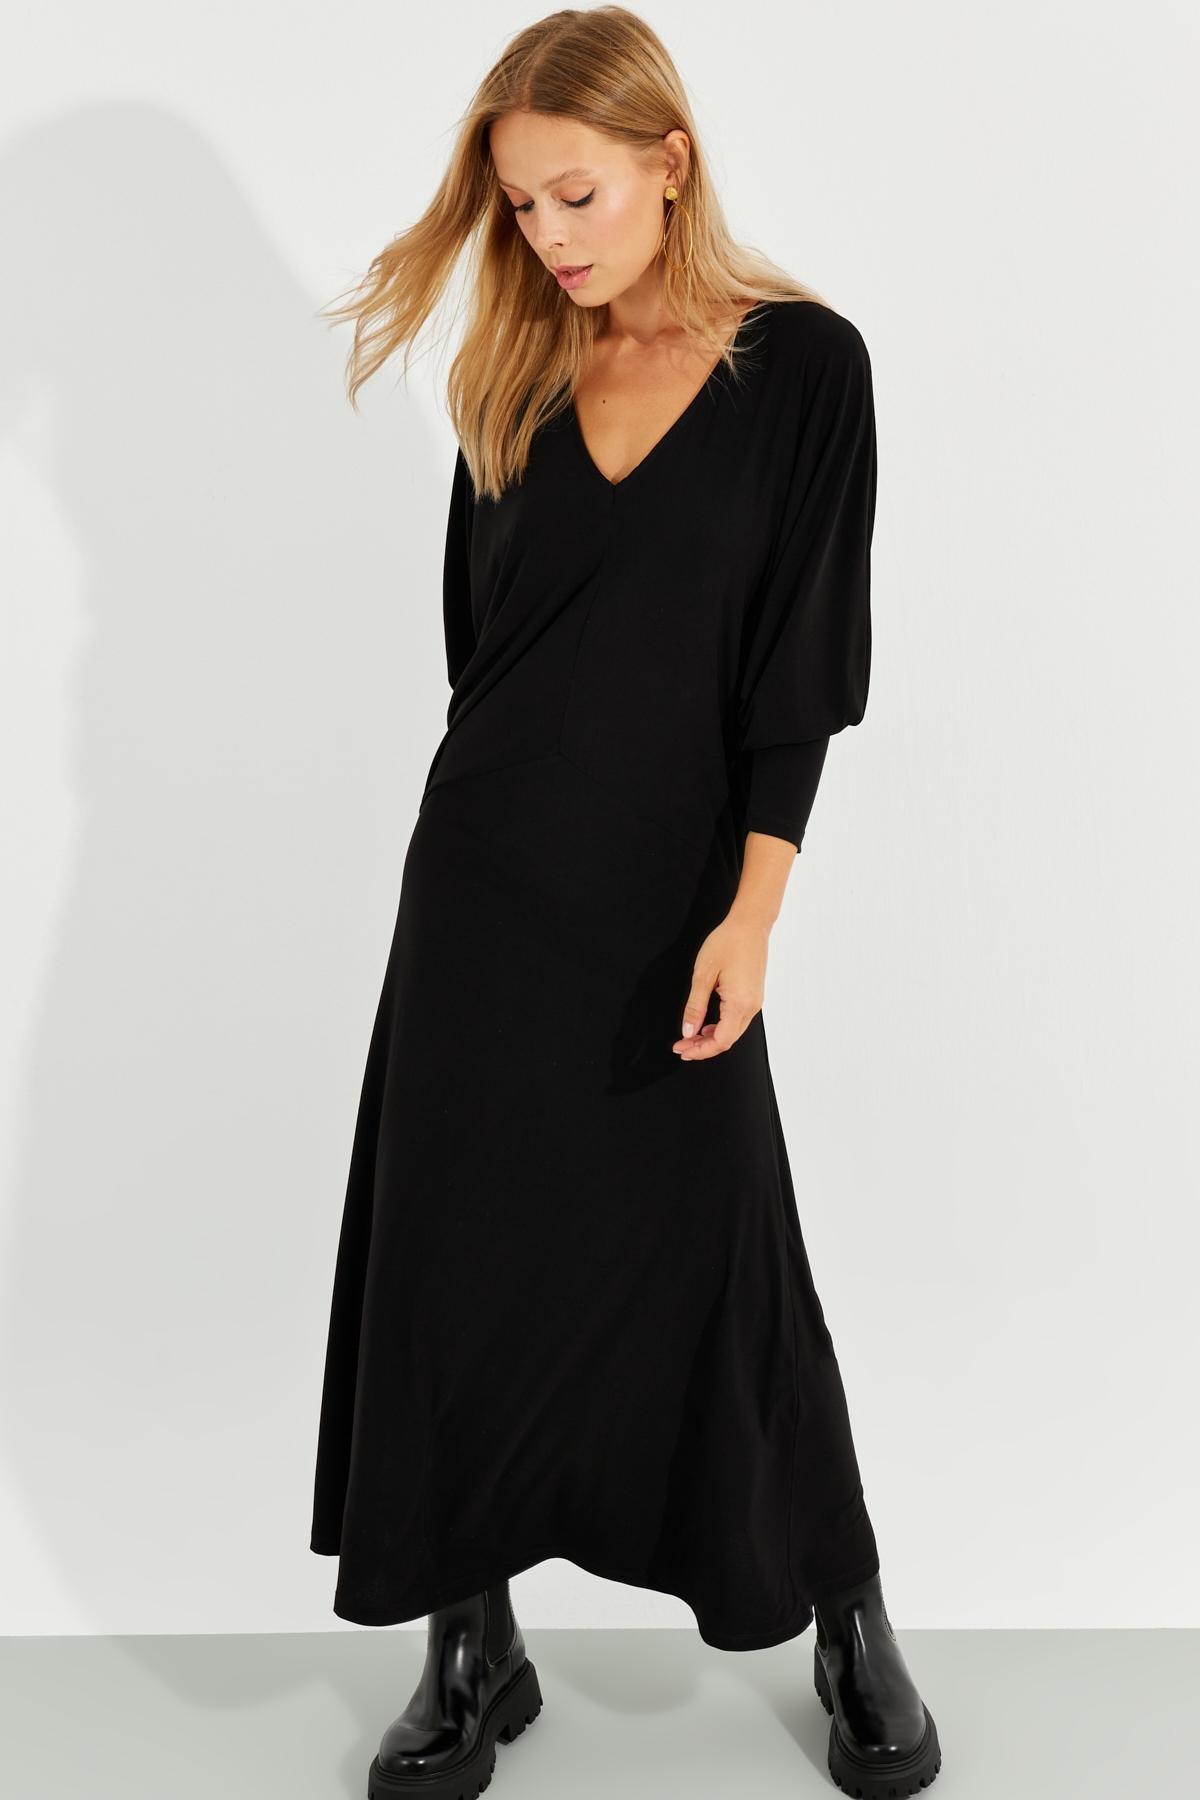 Cool & Sexy - Black Bat Sleeve Midi Dress